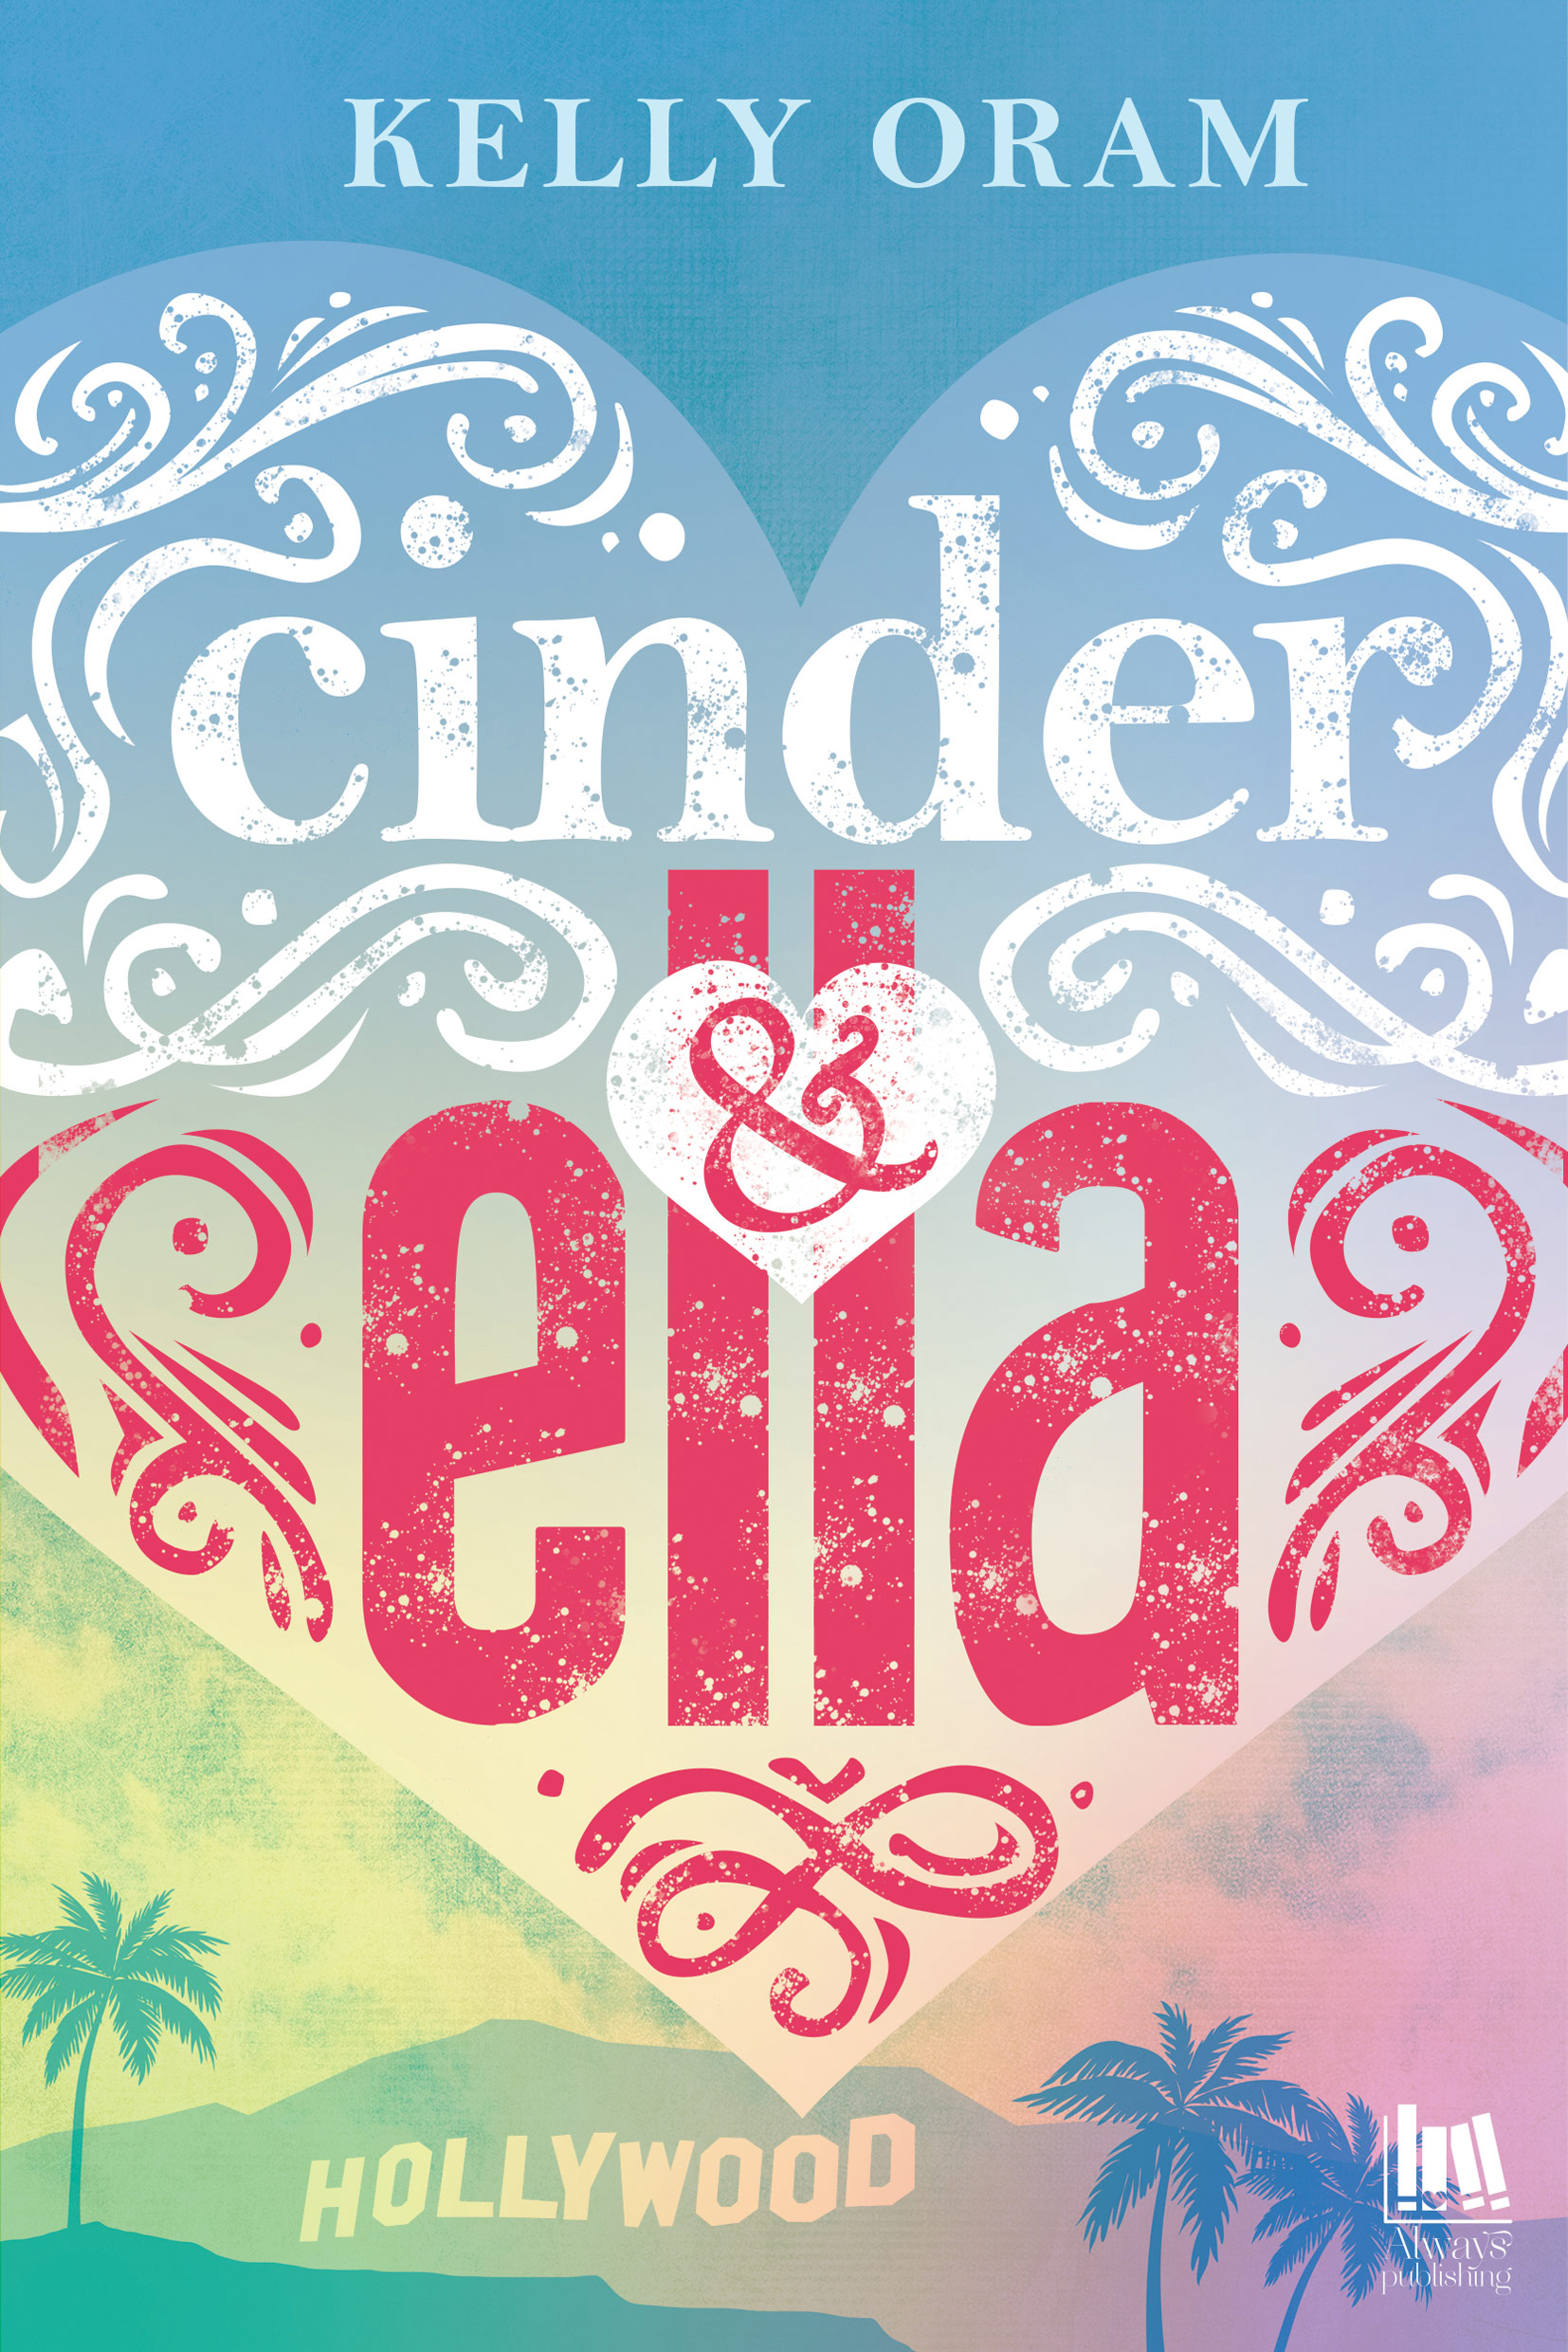 Cover of Cinder & Ella